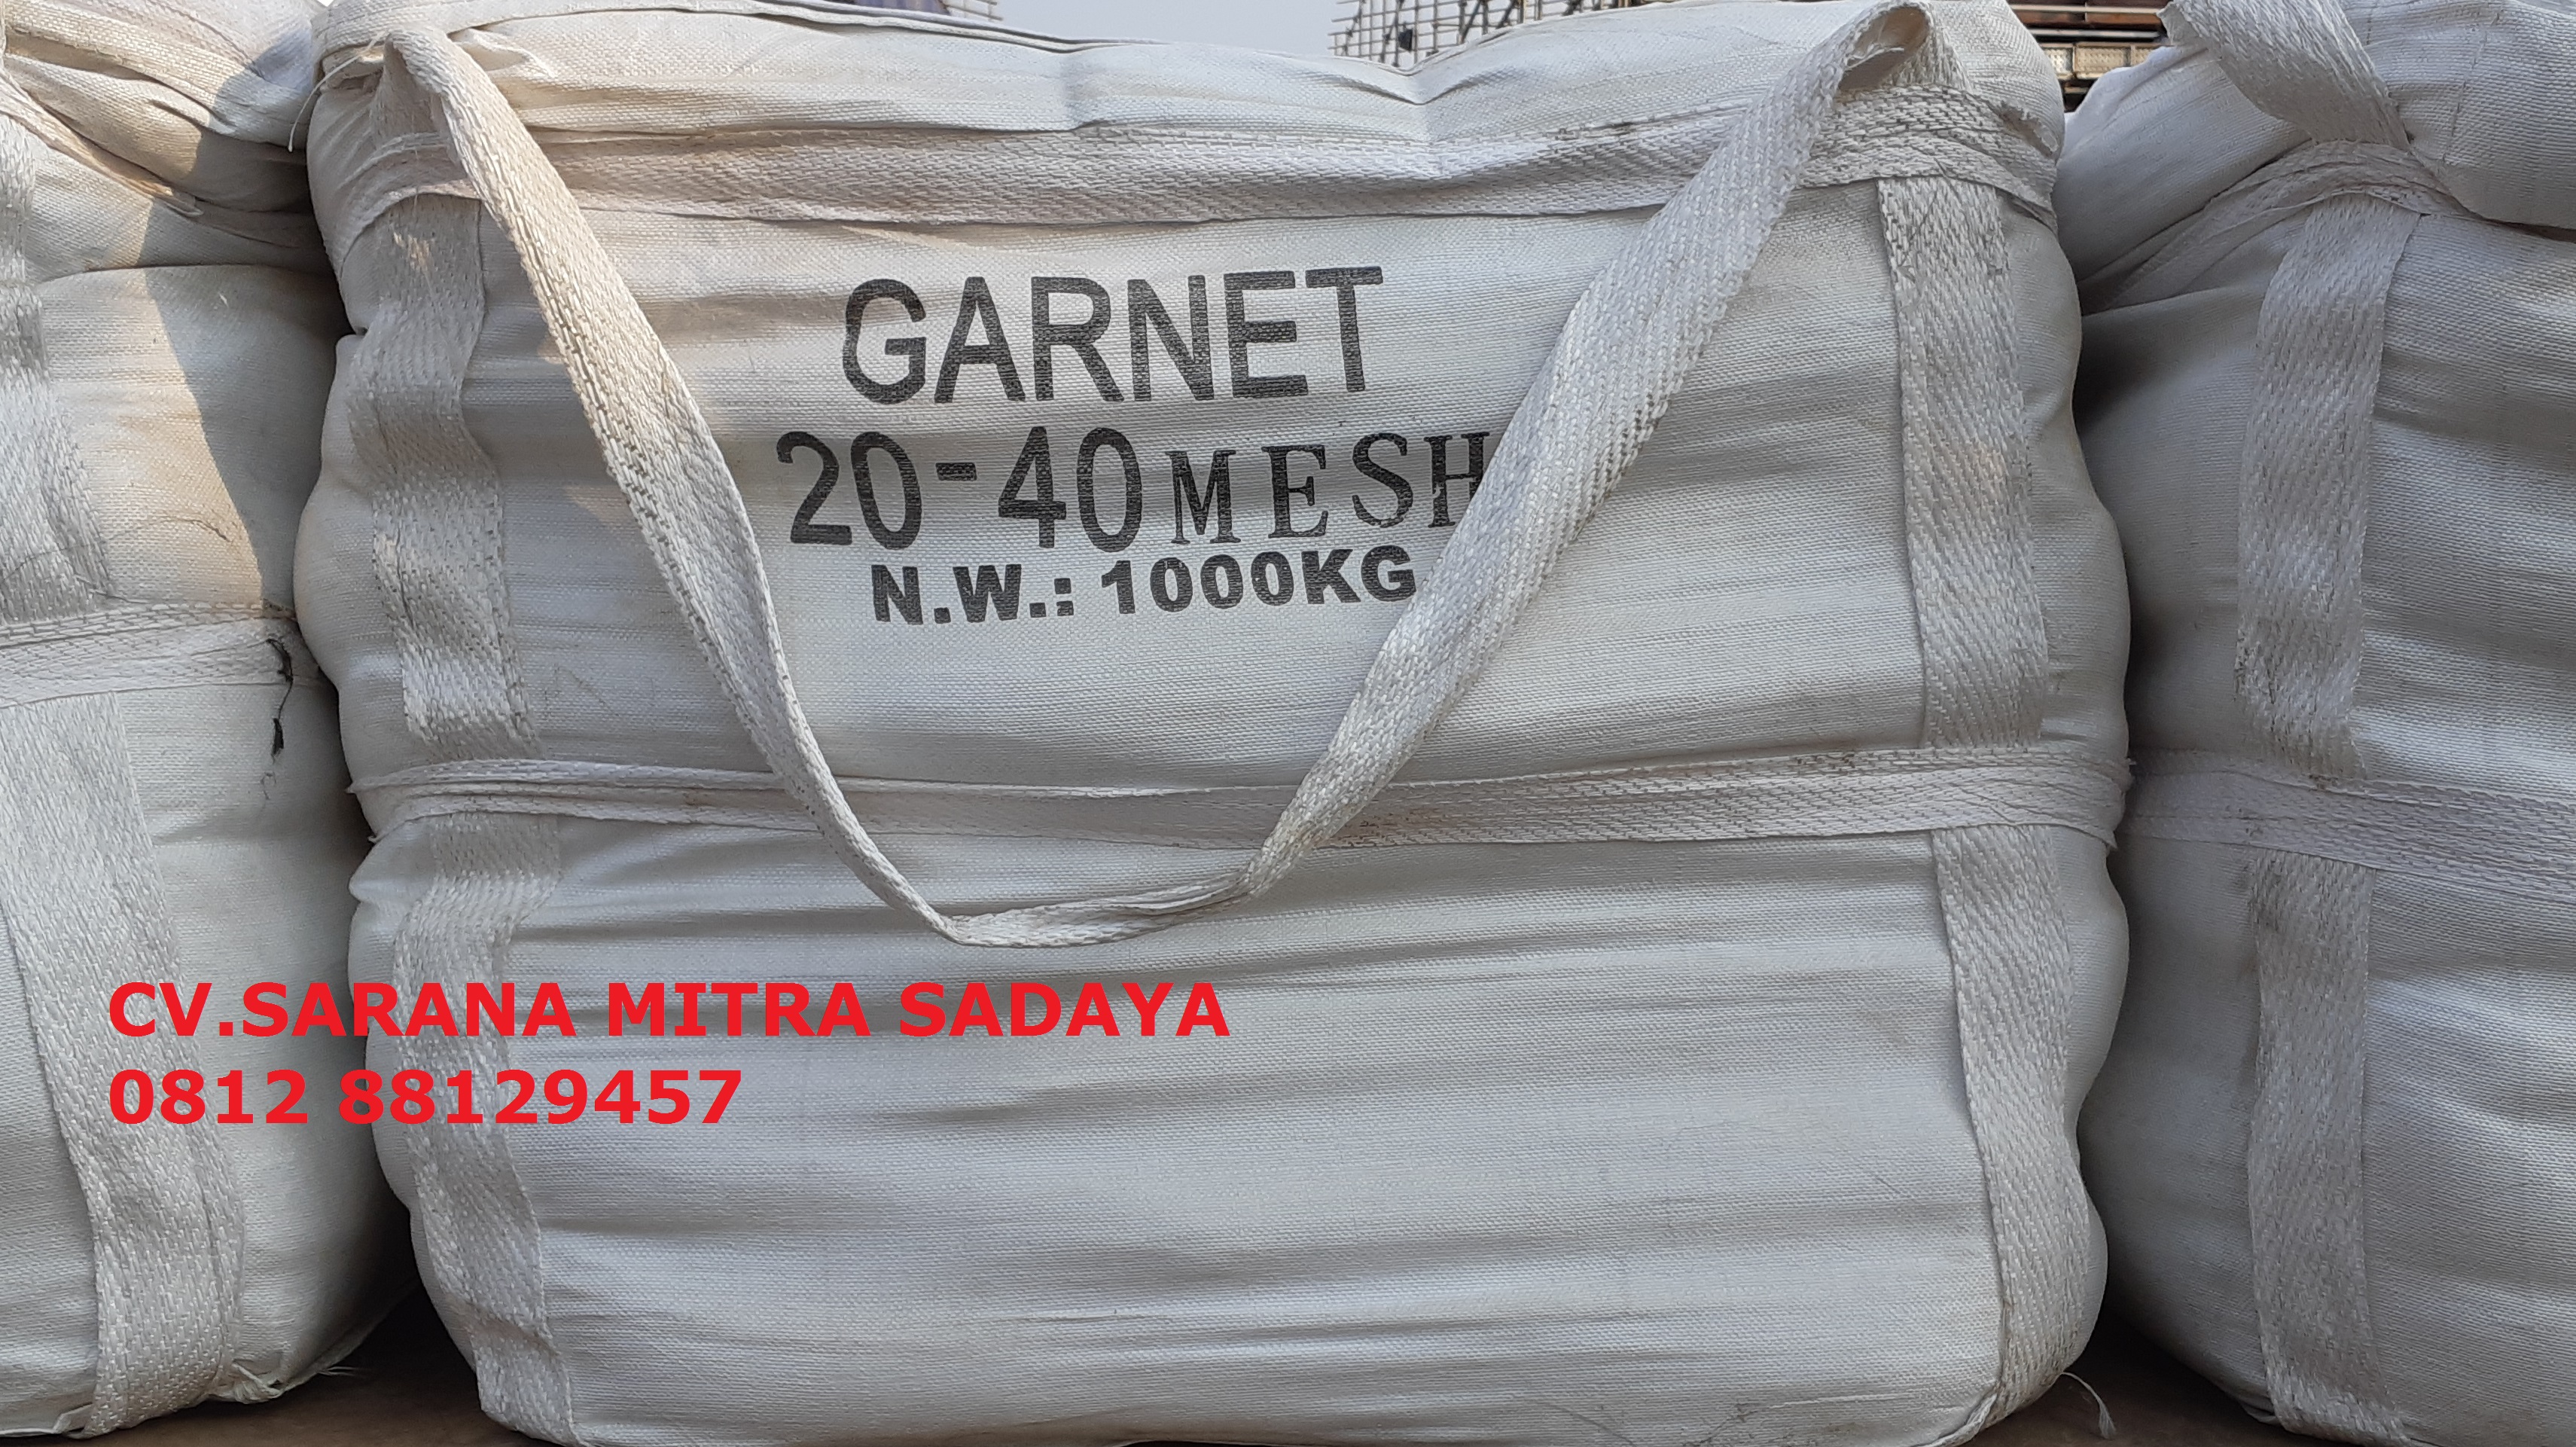 Distributor Garnet Indonesia